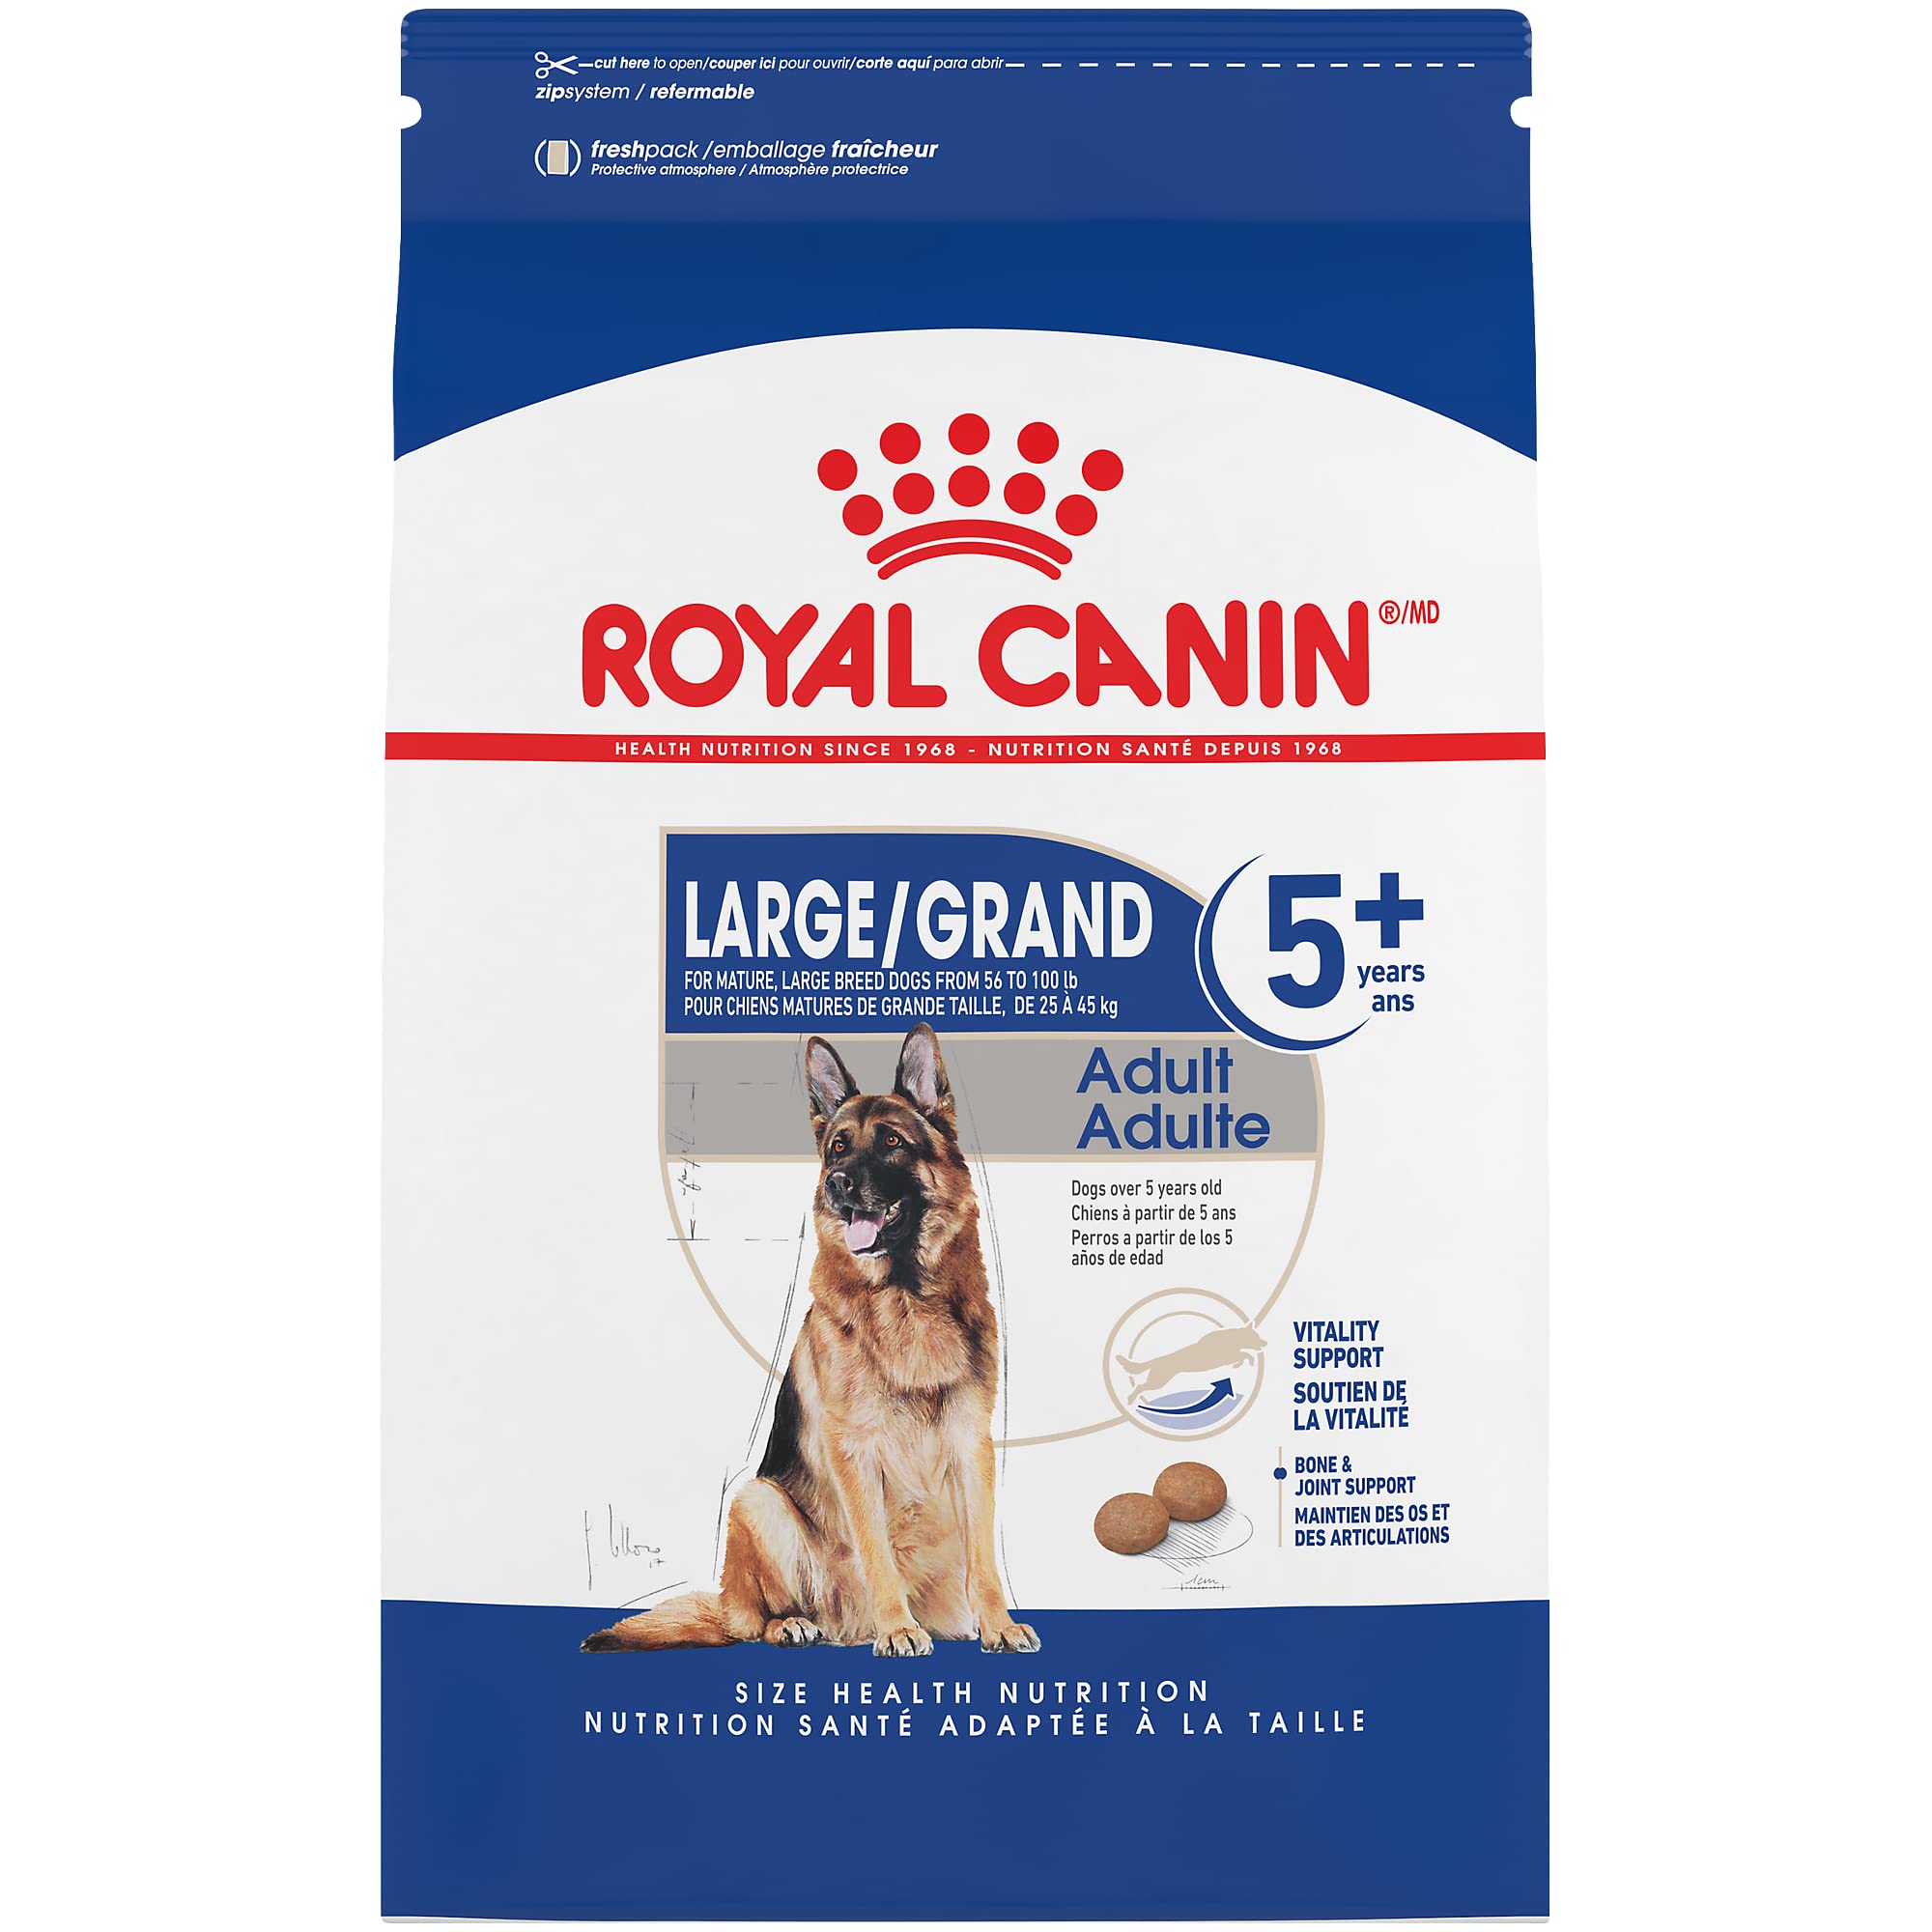 Royal Canin 크기 건강 영양 대형견 건사료